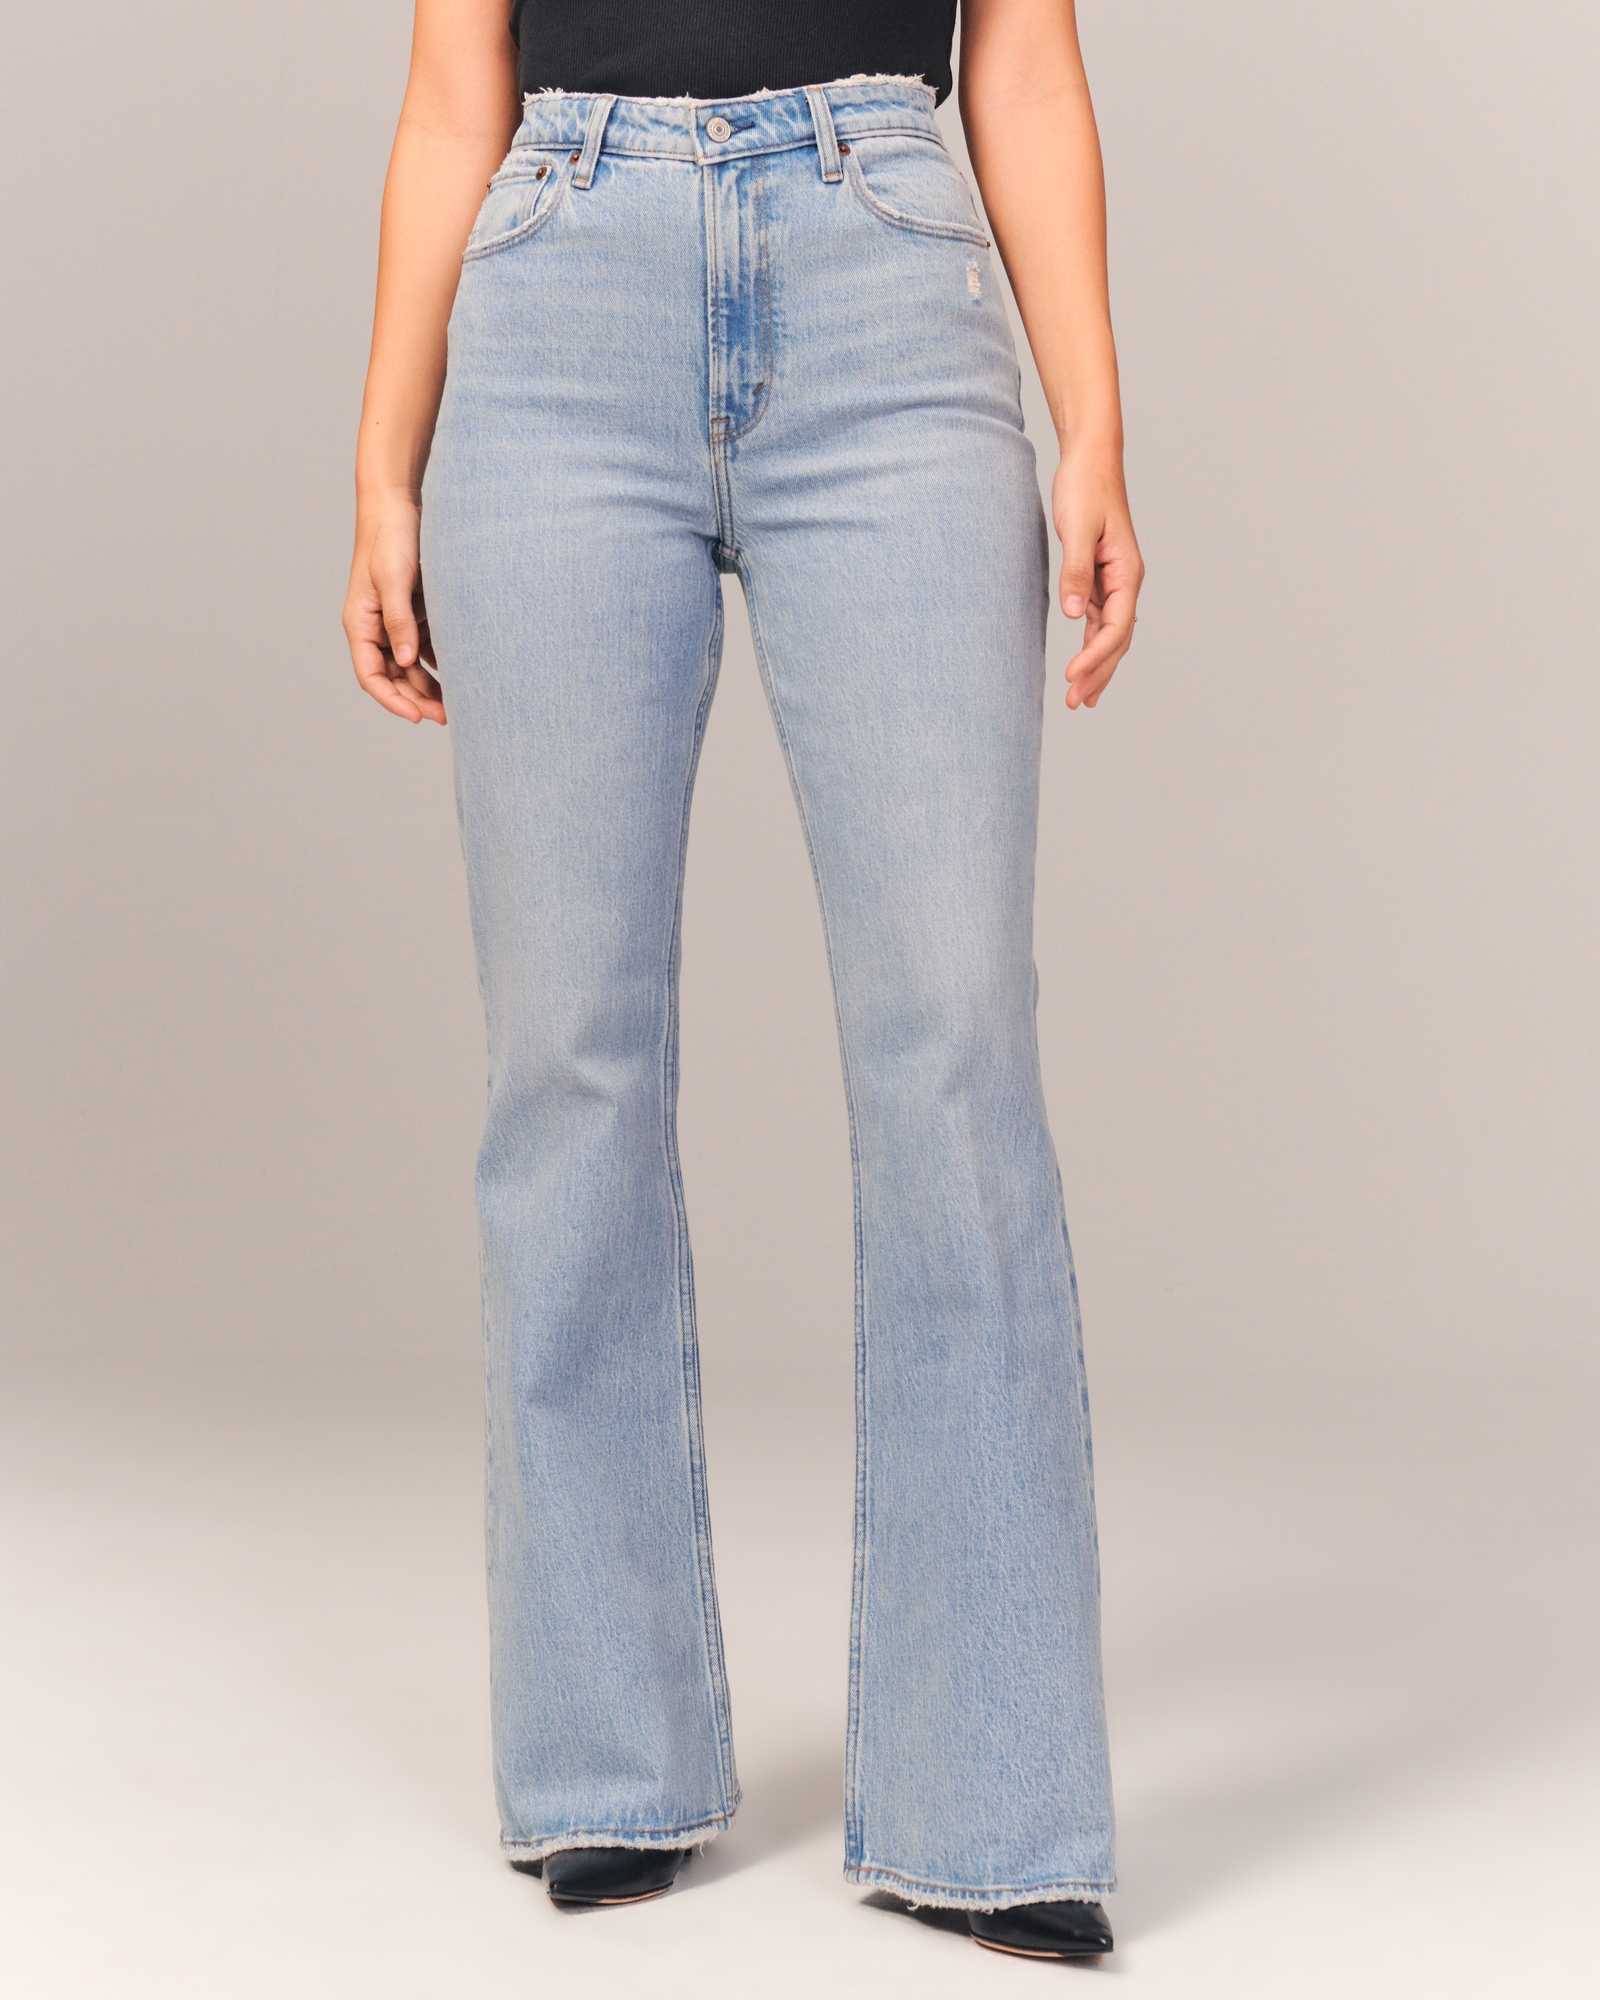 Women's Retor Curvy High Waist Flare Denim Jeans 